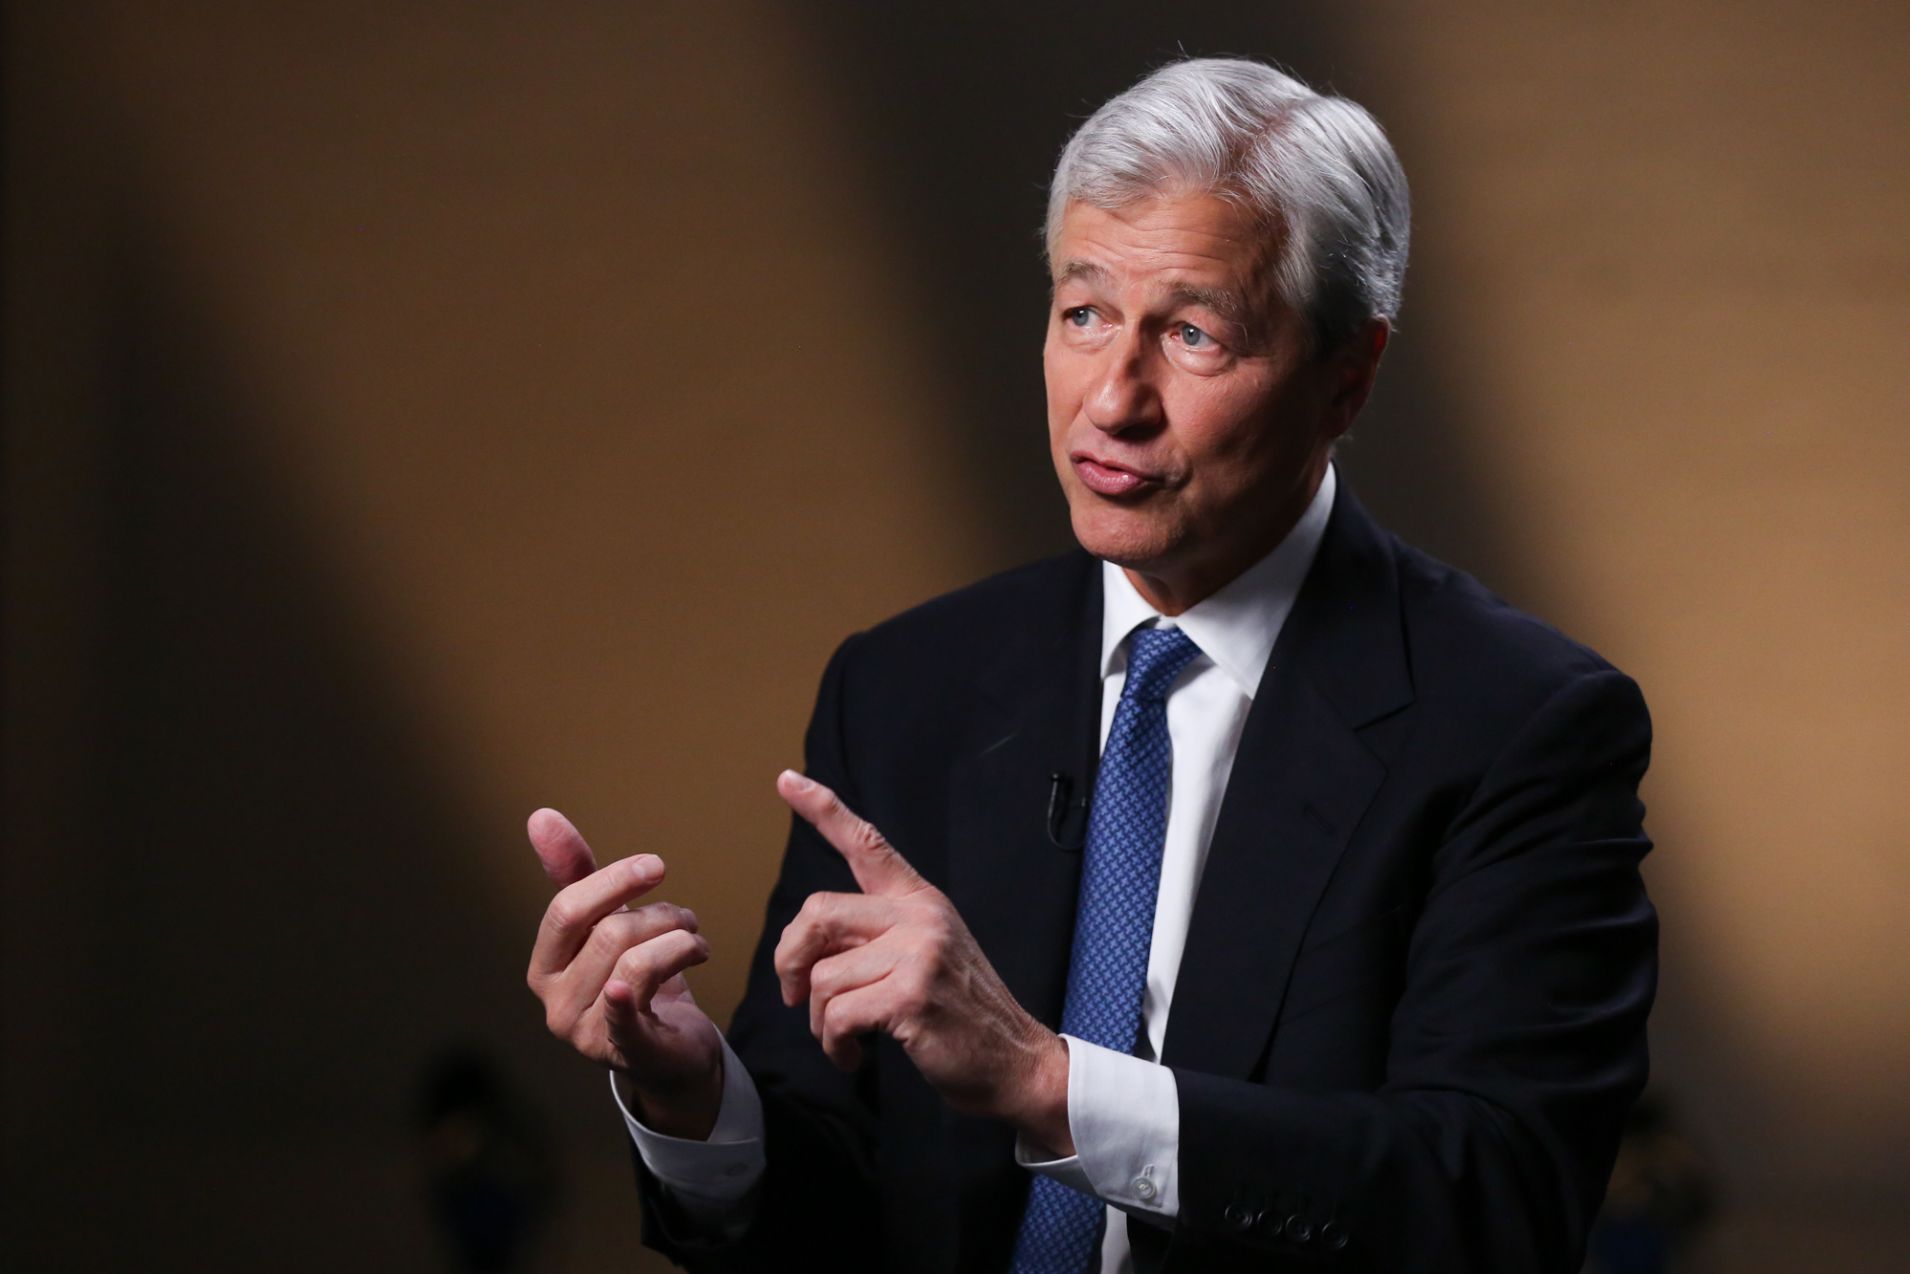 JPMorgan raises option of new fees if rates hit zero